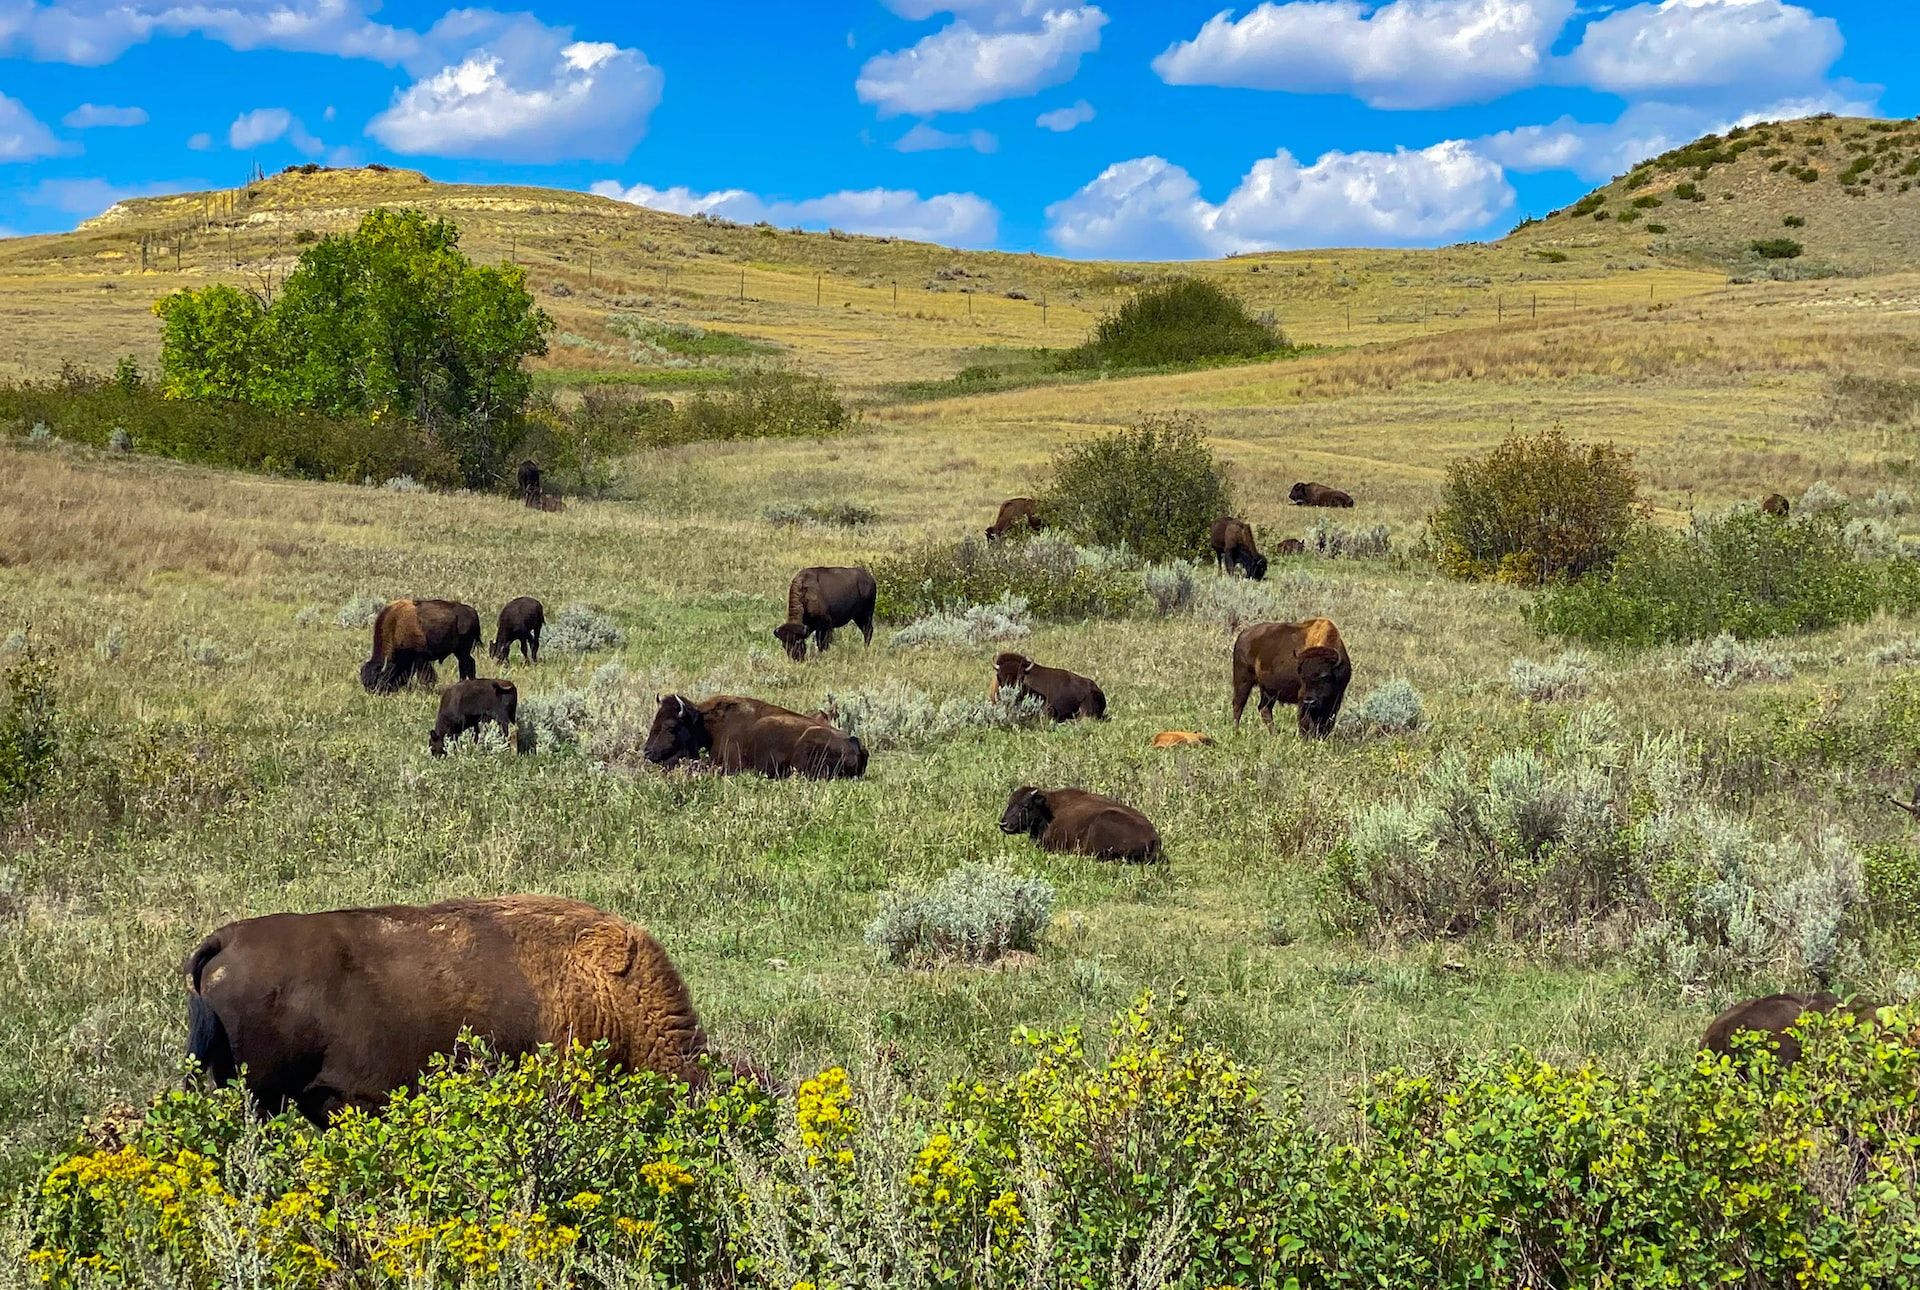 North Dakota wildlife relaxing on a hillside